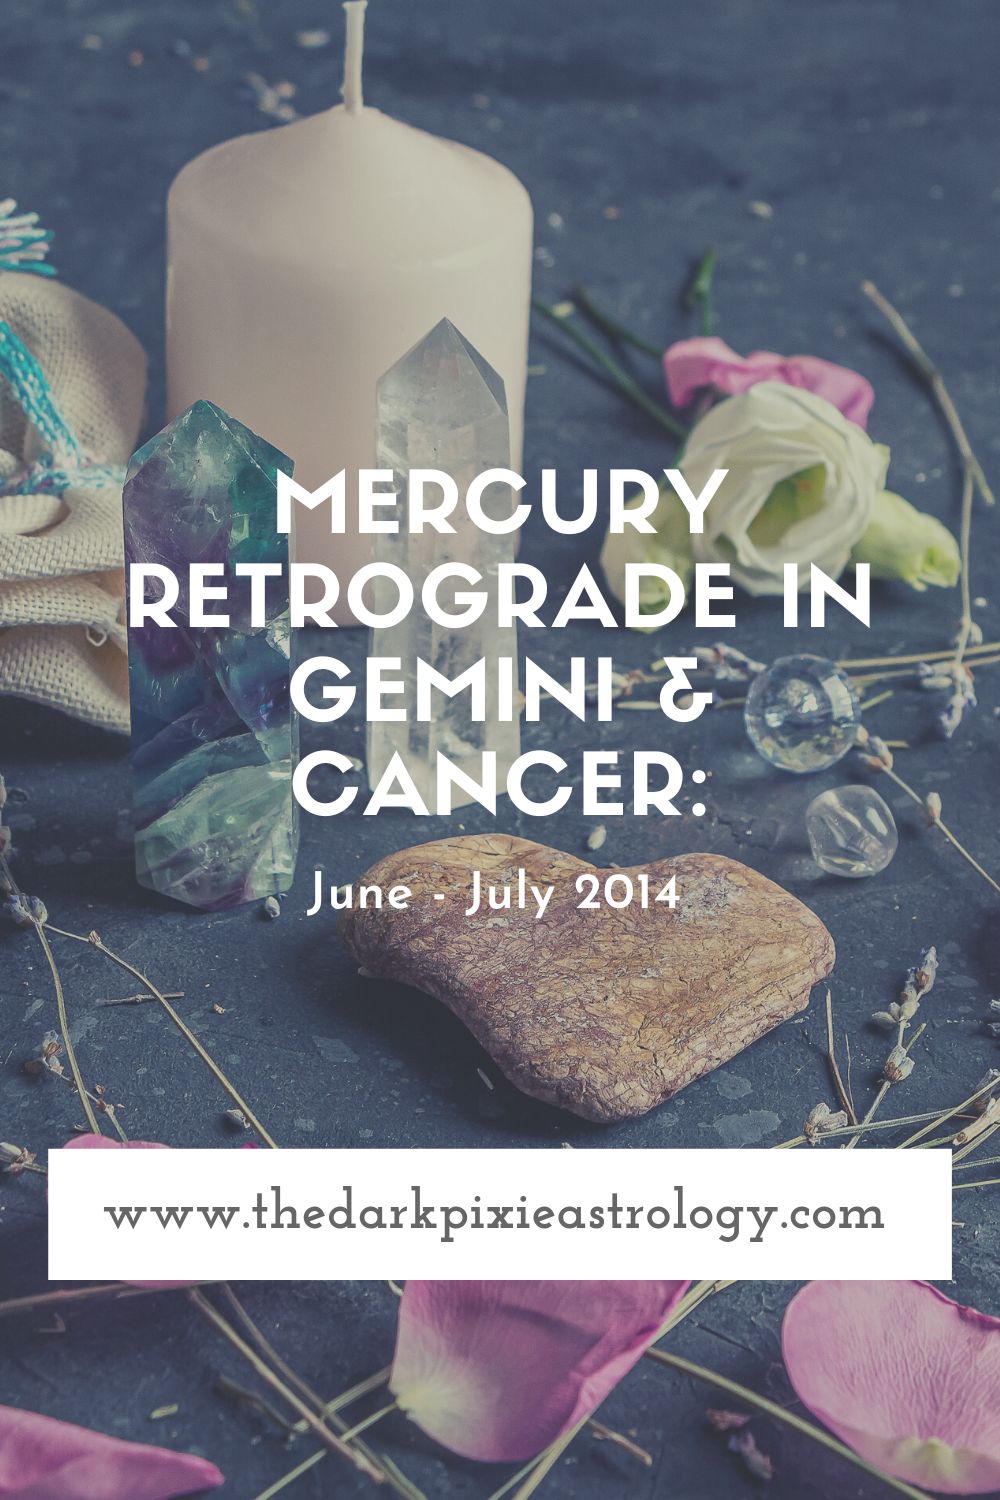 Mercury Retrograde in Gemini & Cancer: June - July 2014 - The Dark Pixie Astrology